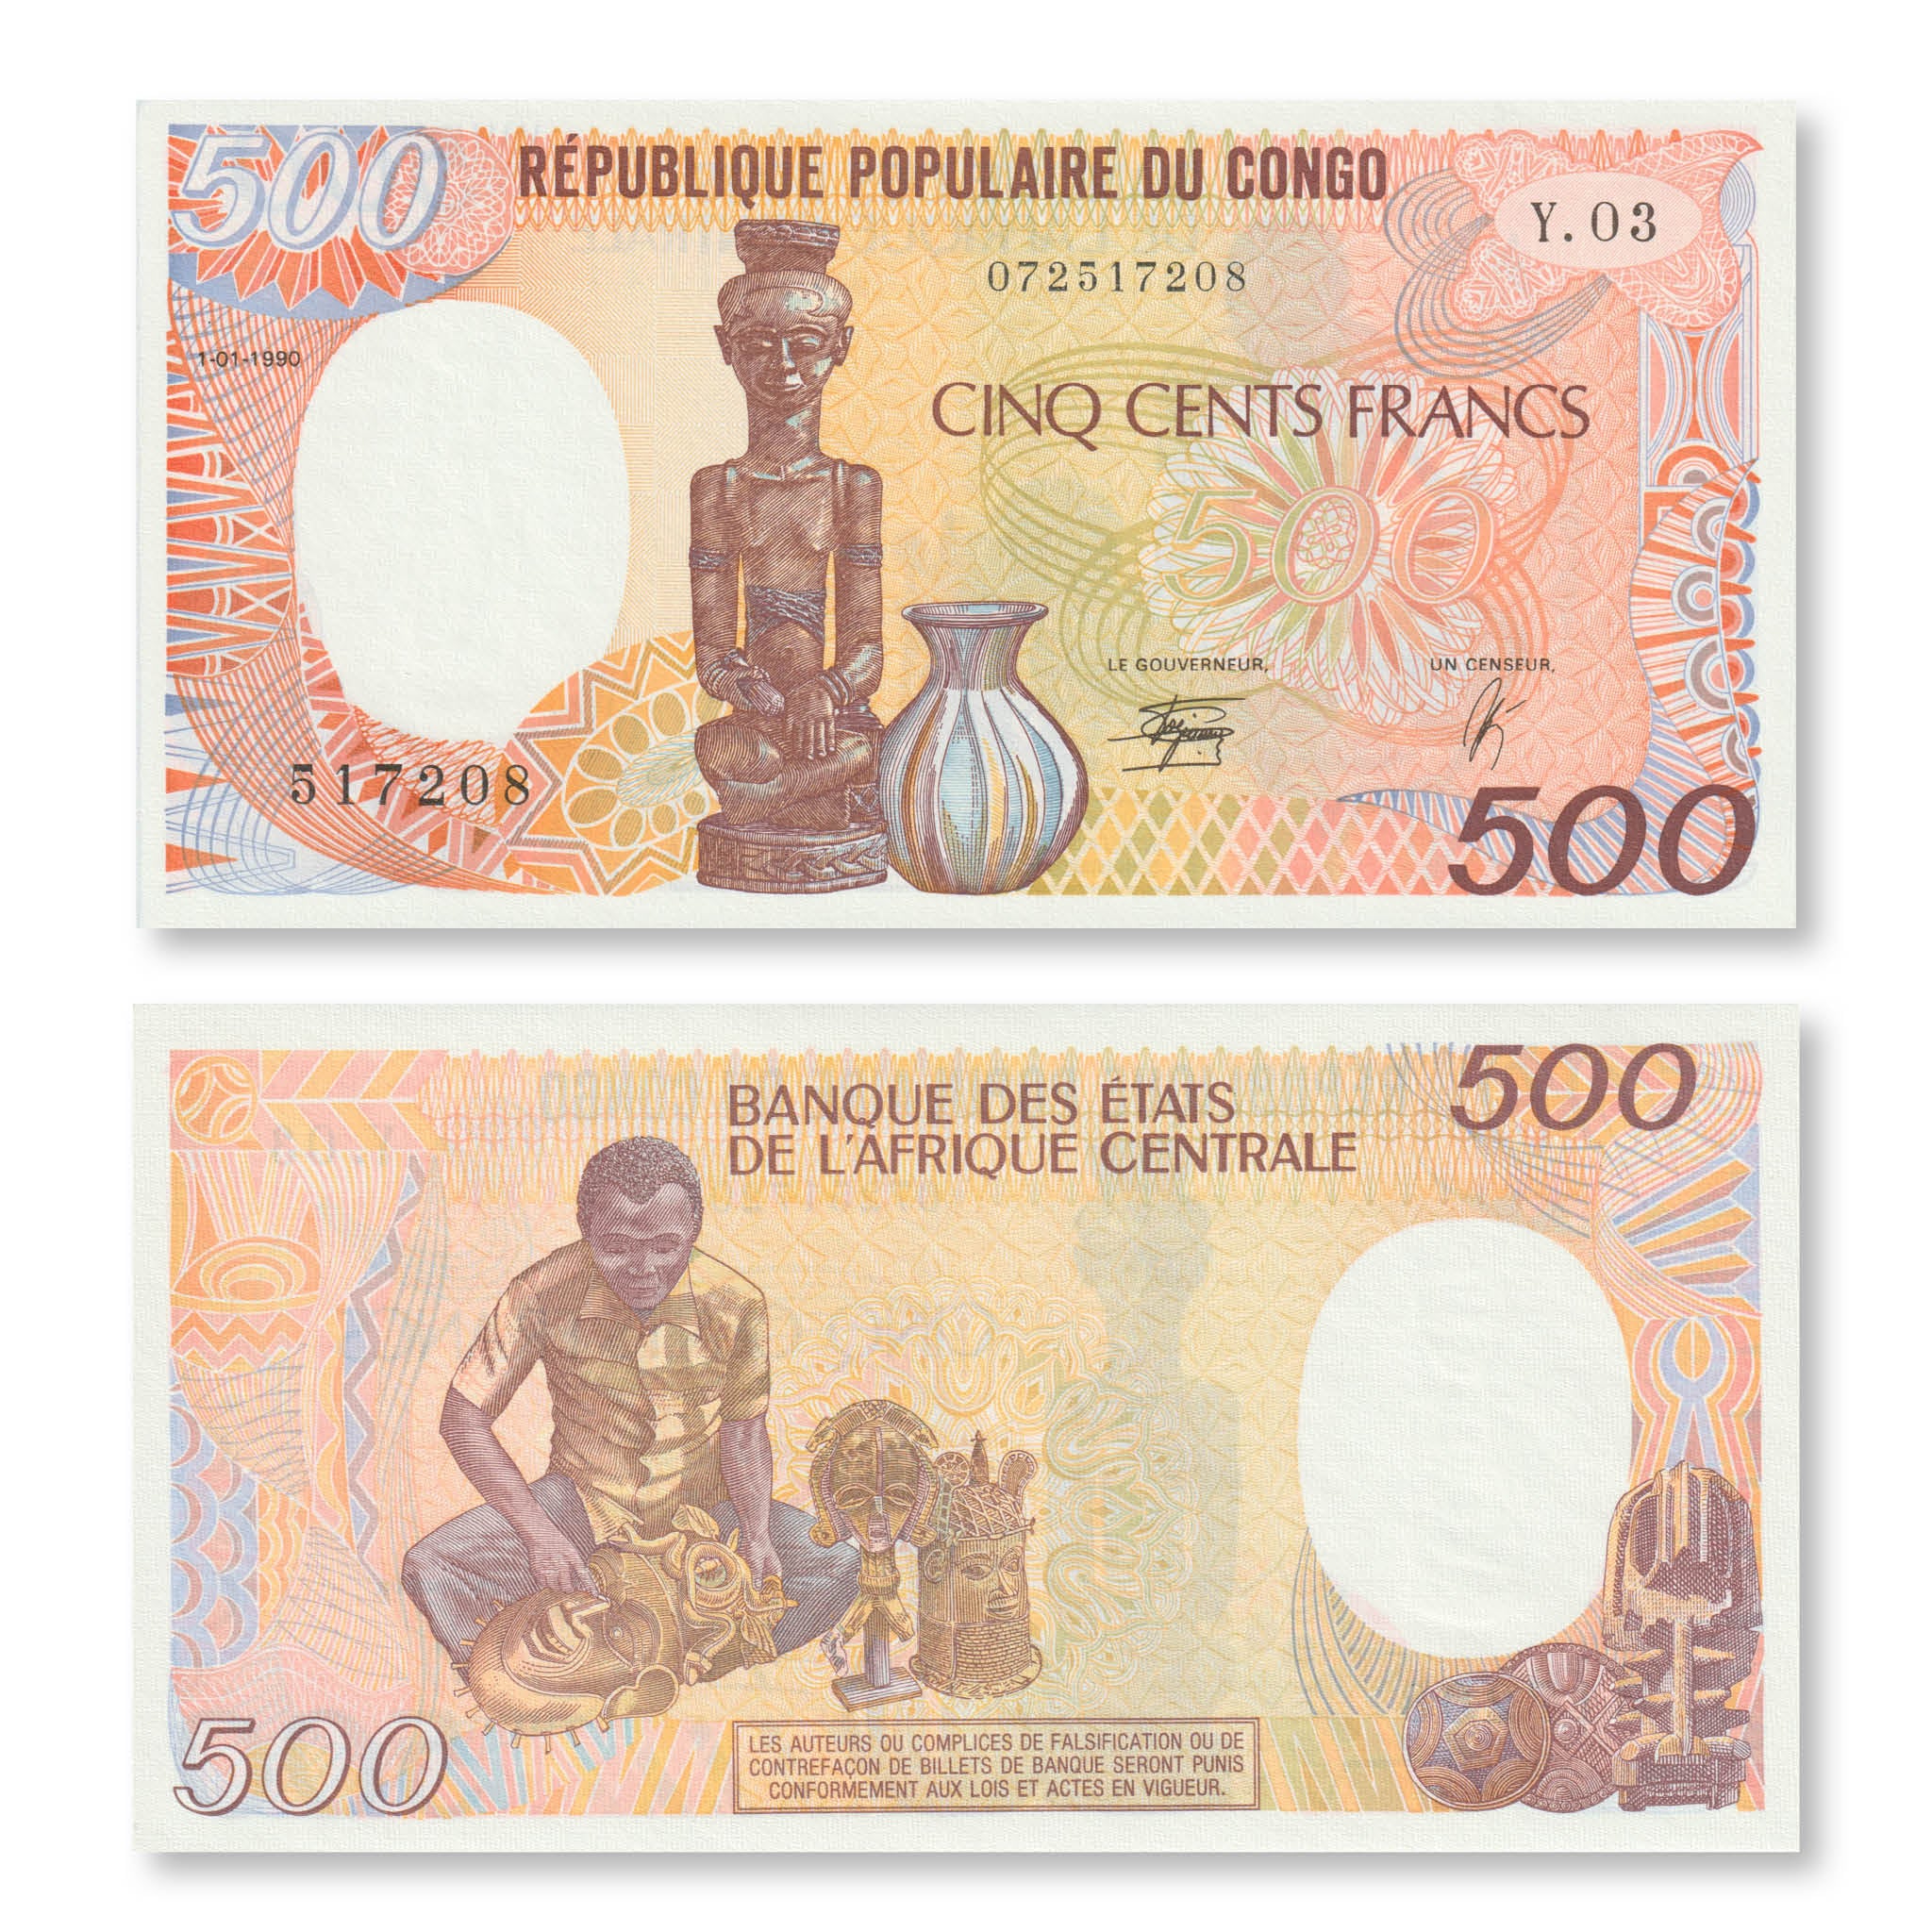 Congo Republic of 500 Francs, 1990, B207e, P8c, UNC - Robert's World Money - World Banknotes